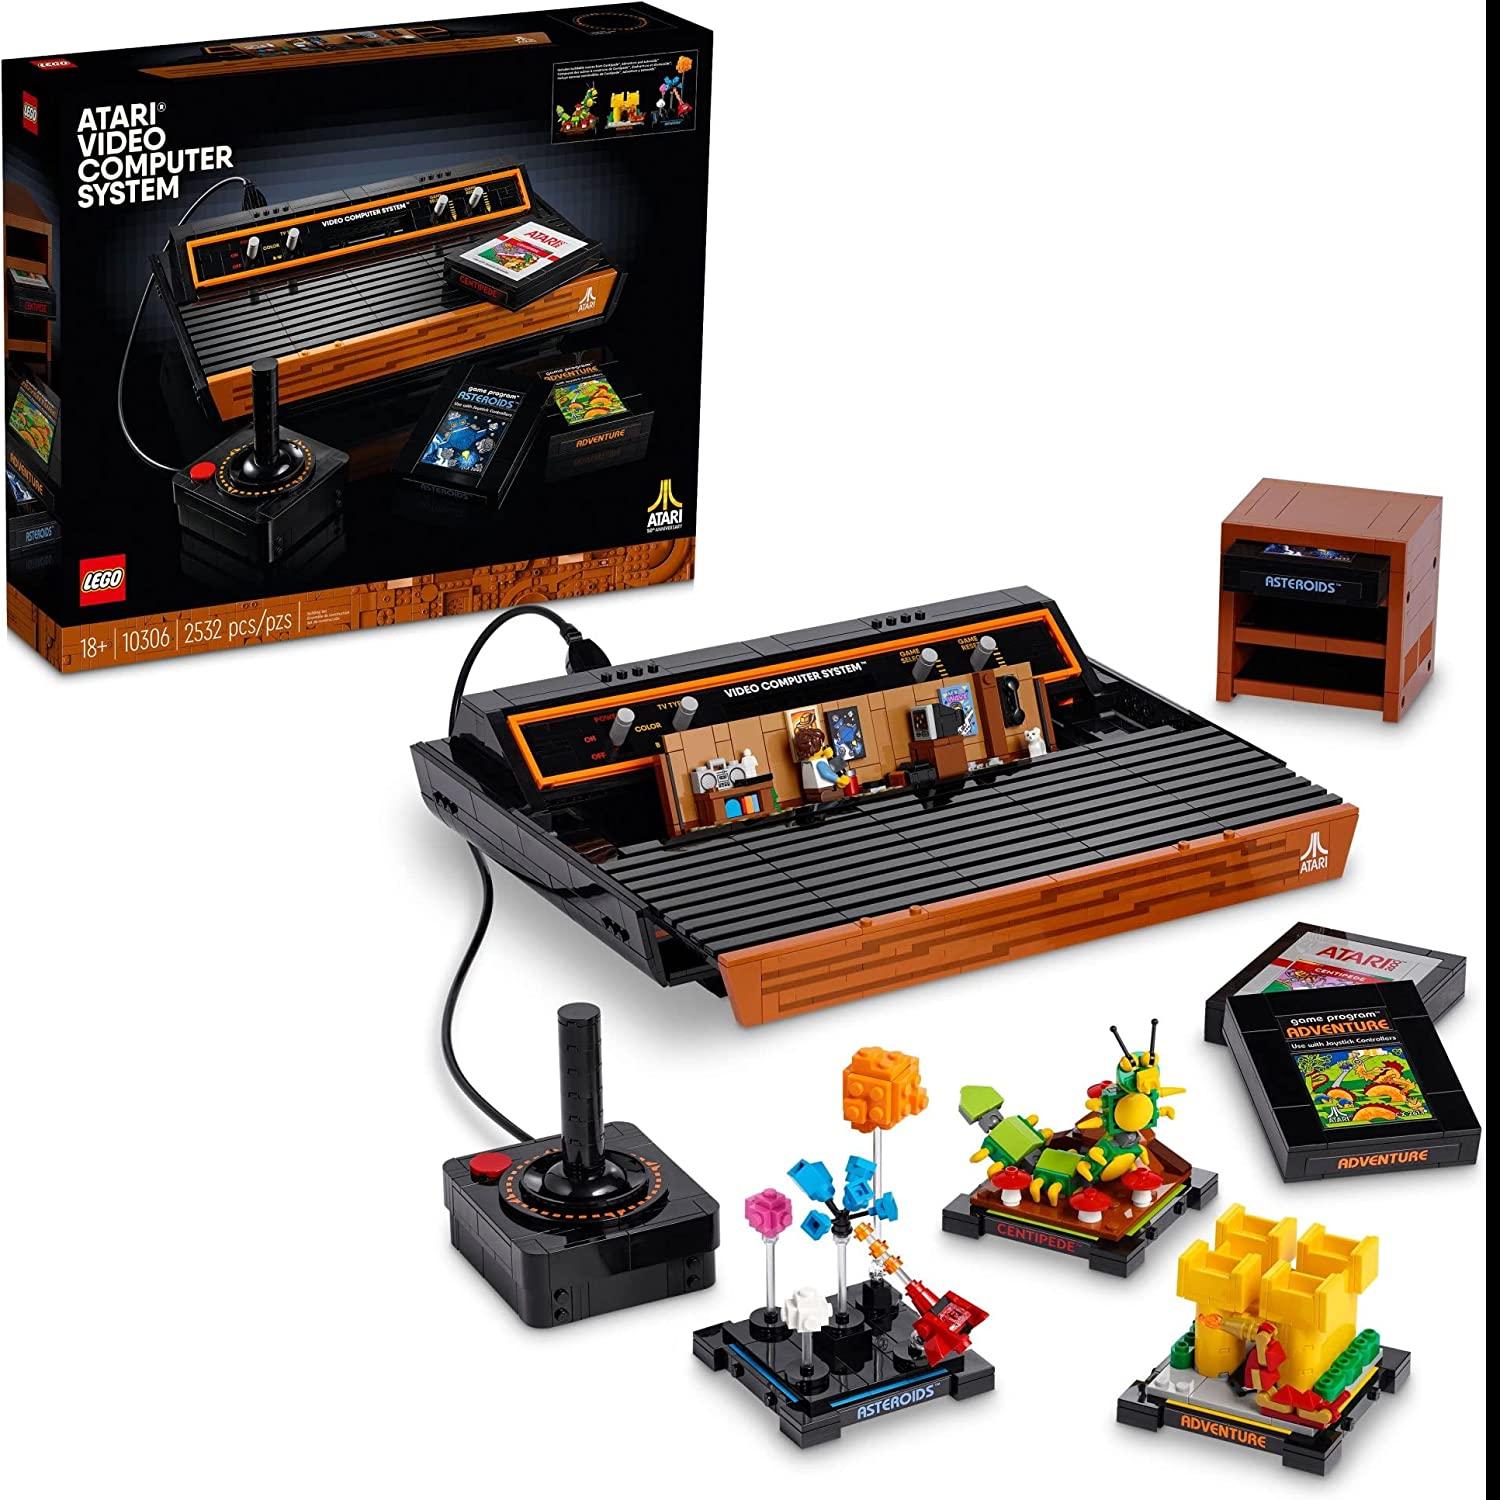 LEGO Icons Atari 2600 10306 Model Building Kit for $210 Shipped